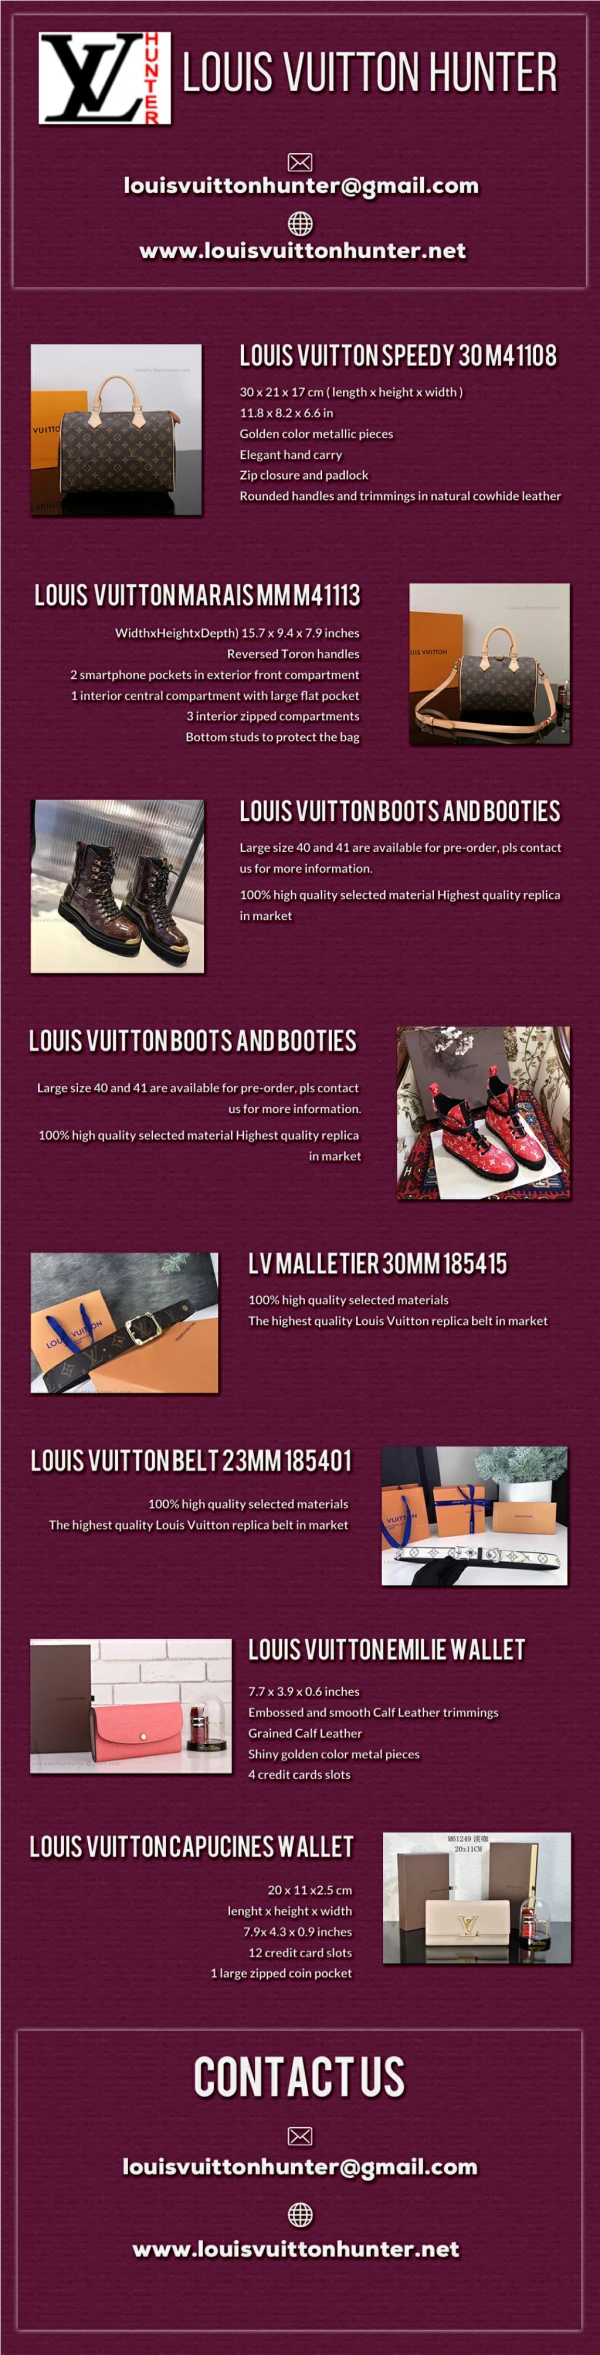 Buy Louis Vuitton Replica Online- The Best Designer Louis Vuitton Knockoff Online